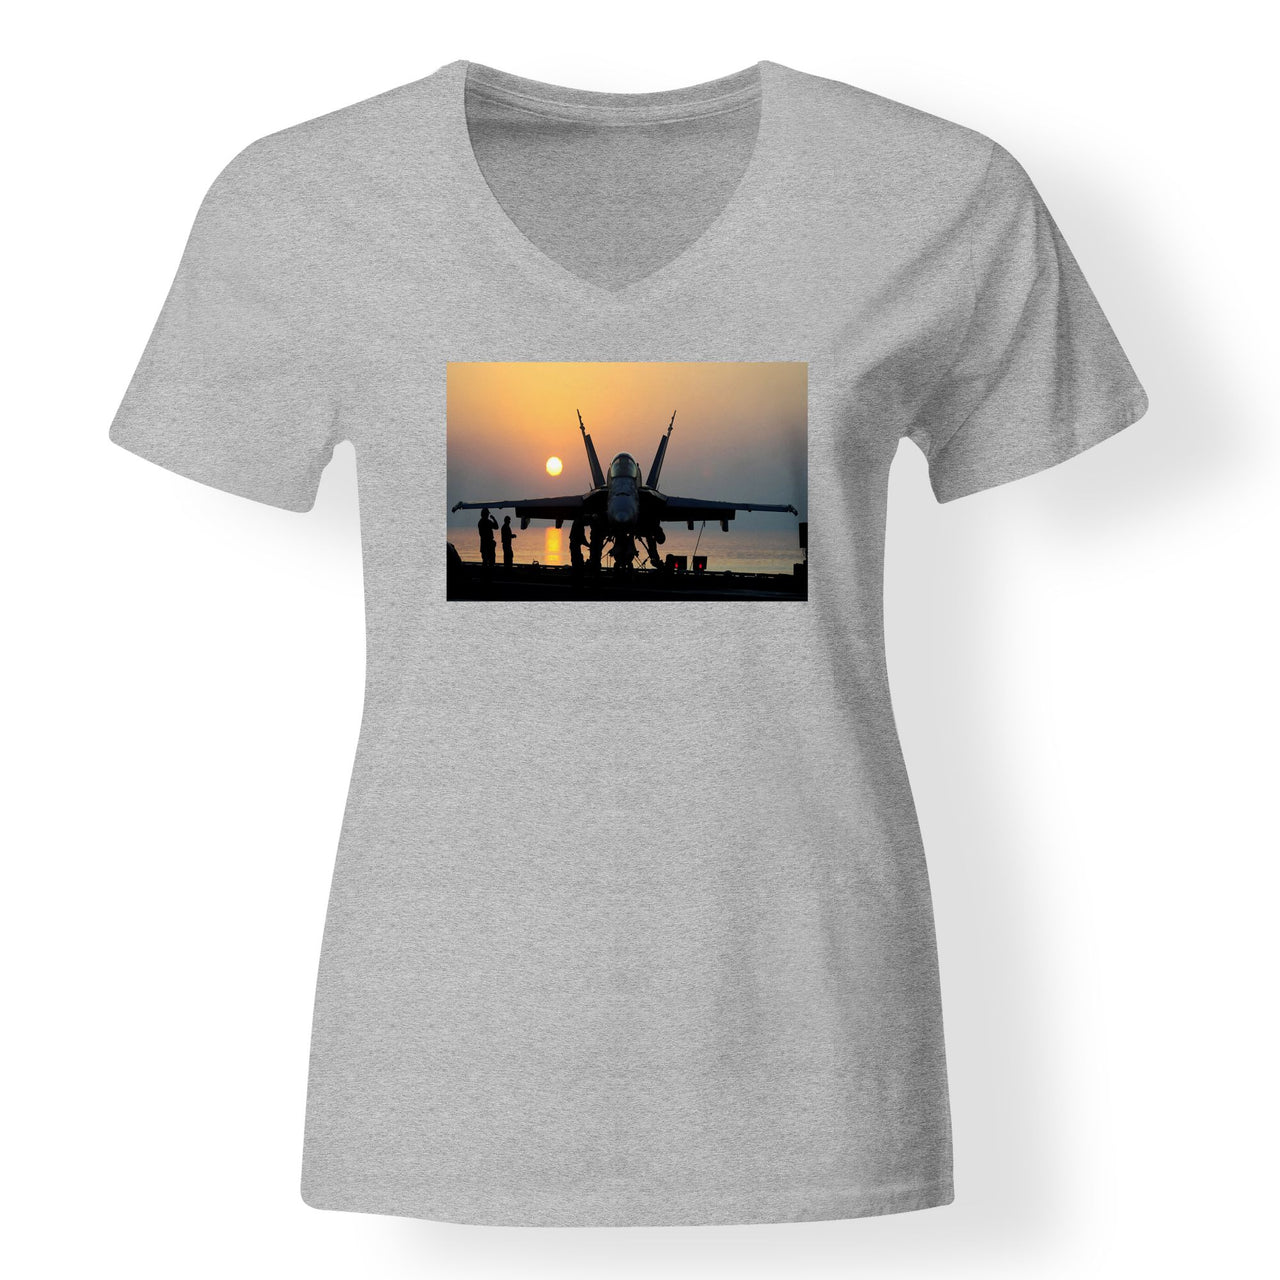 Military Jet During Sunset Designed V-Neck T-Shirts